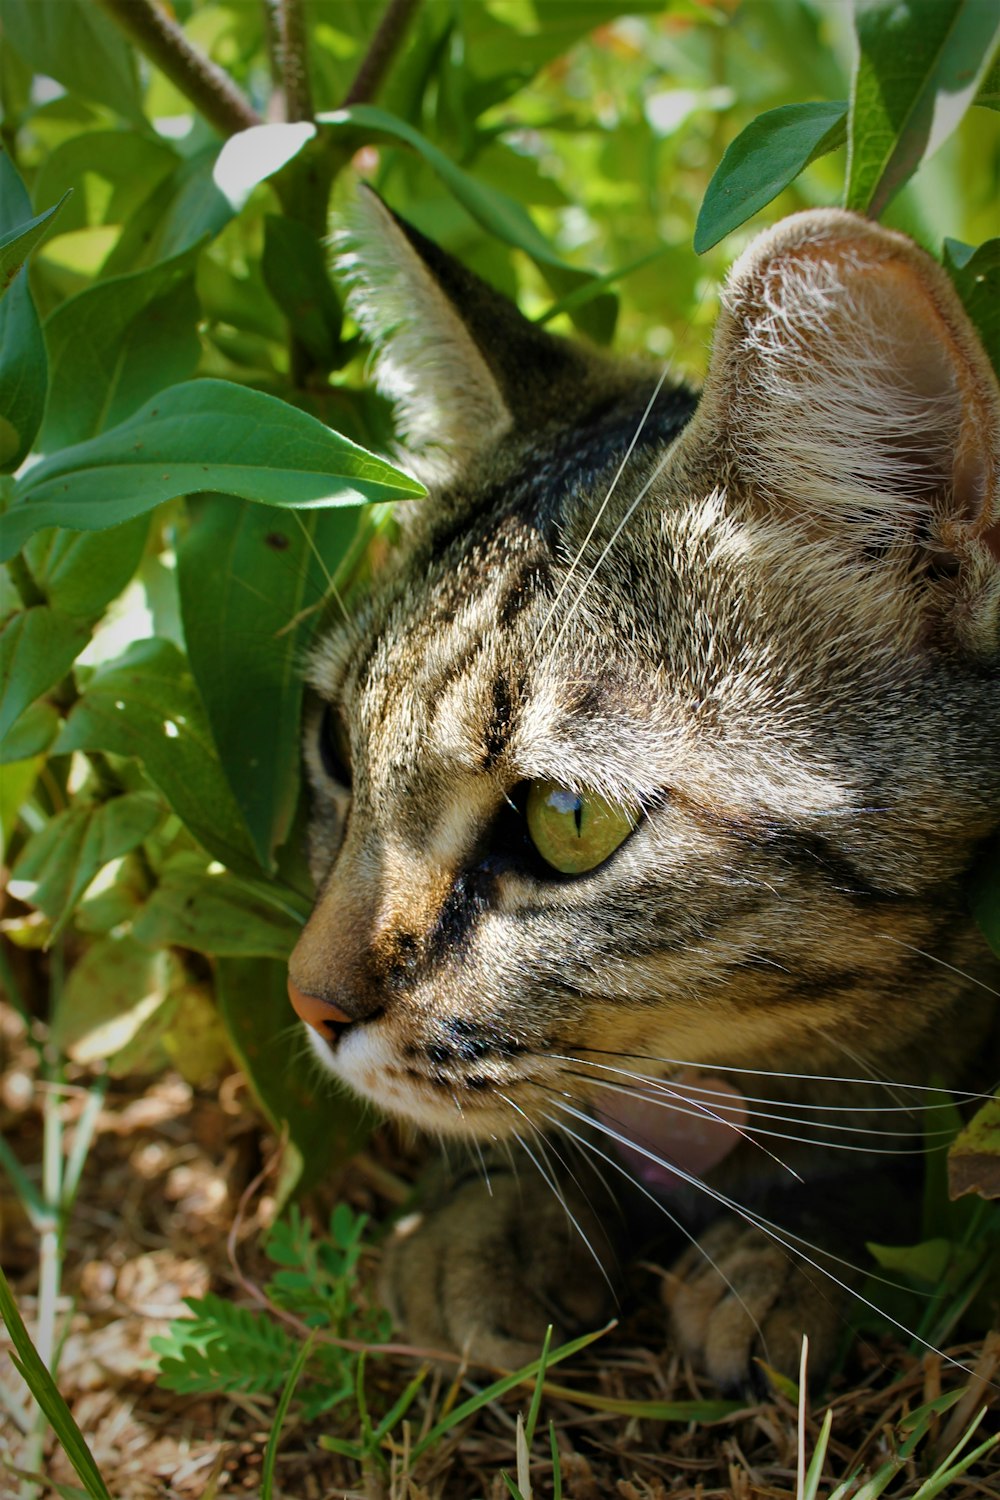 brown tabby cat on green leaves